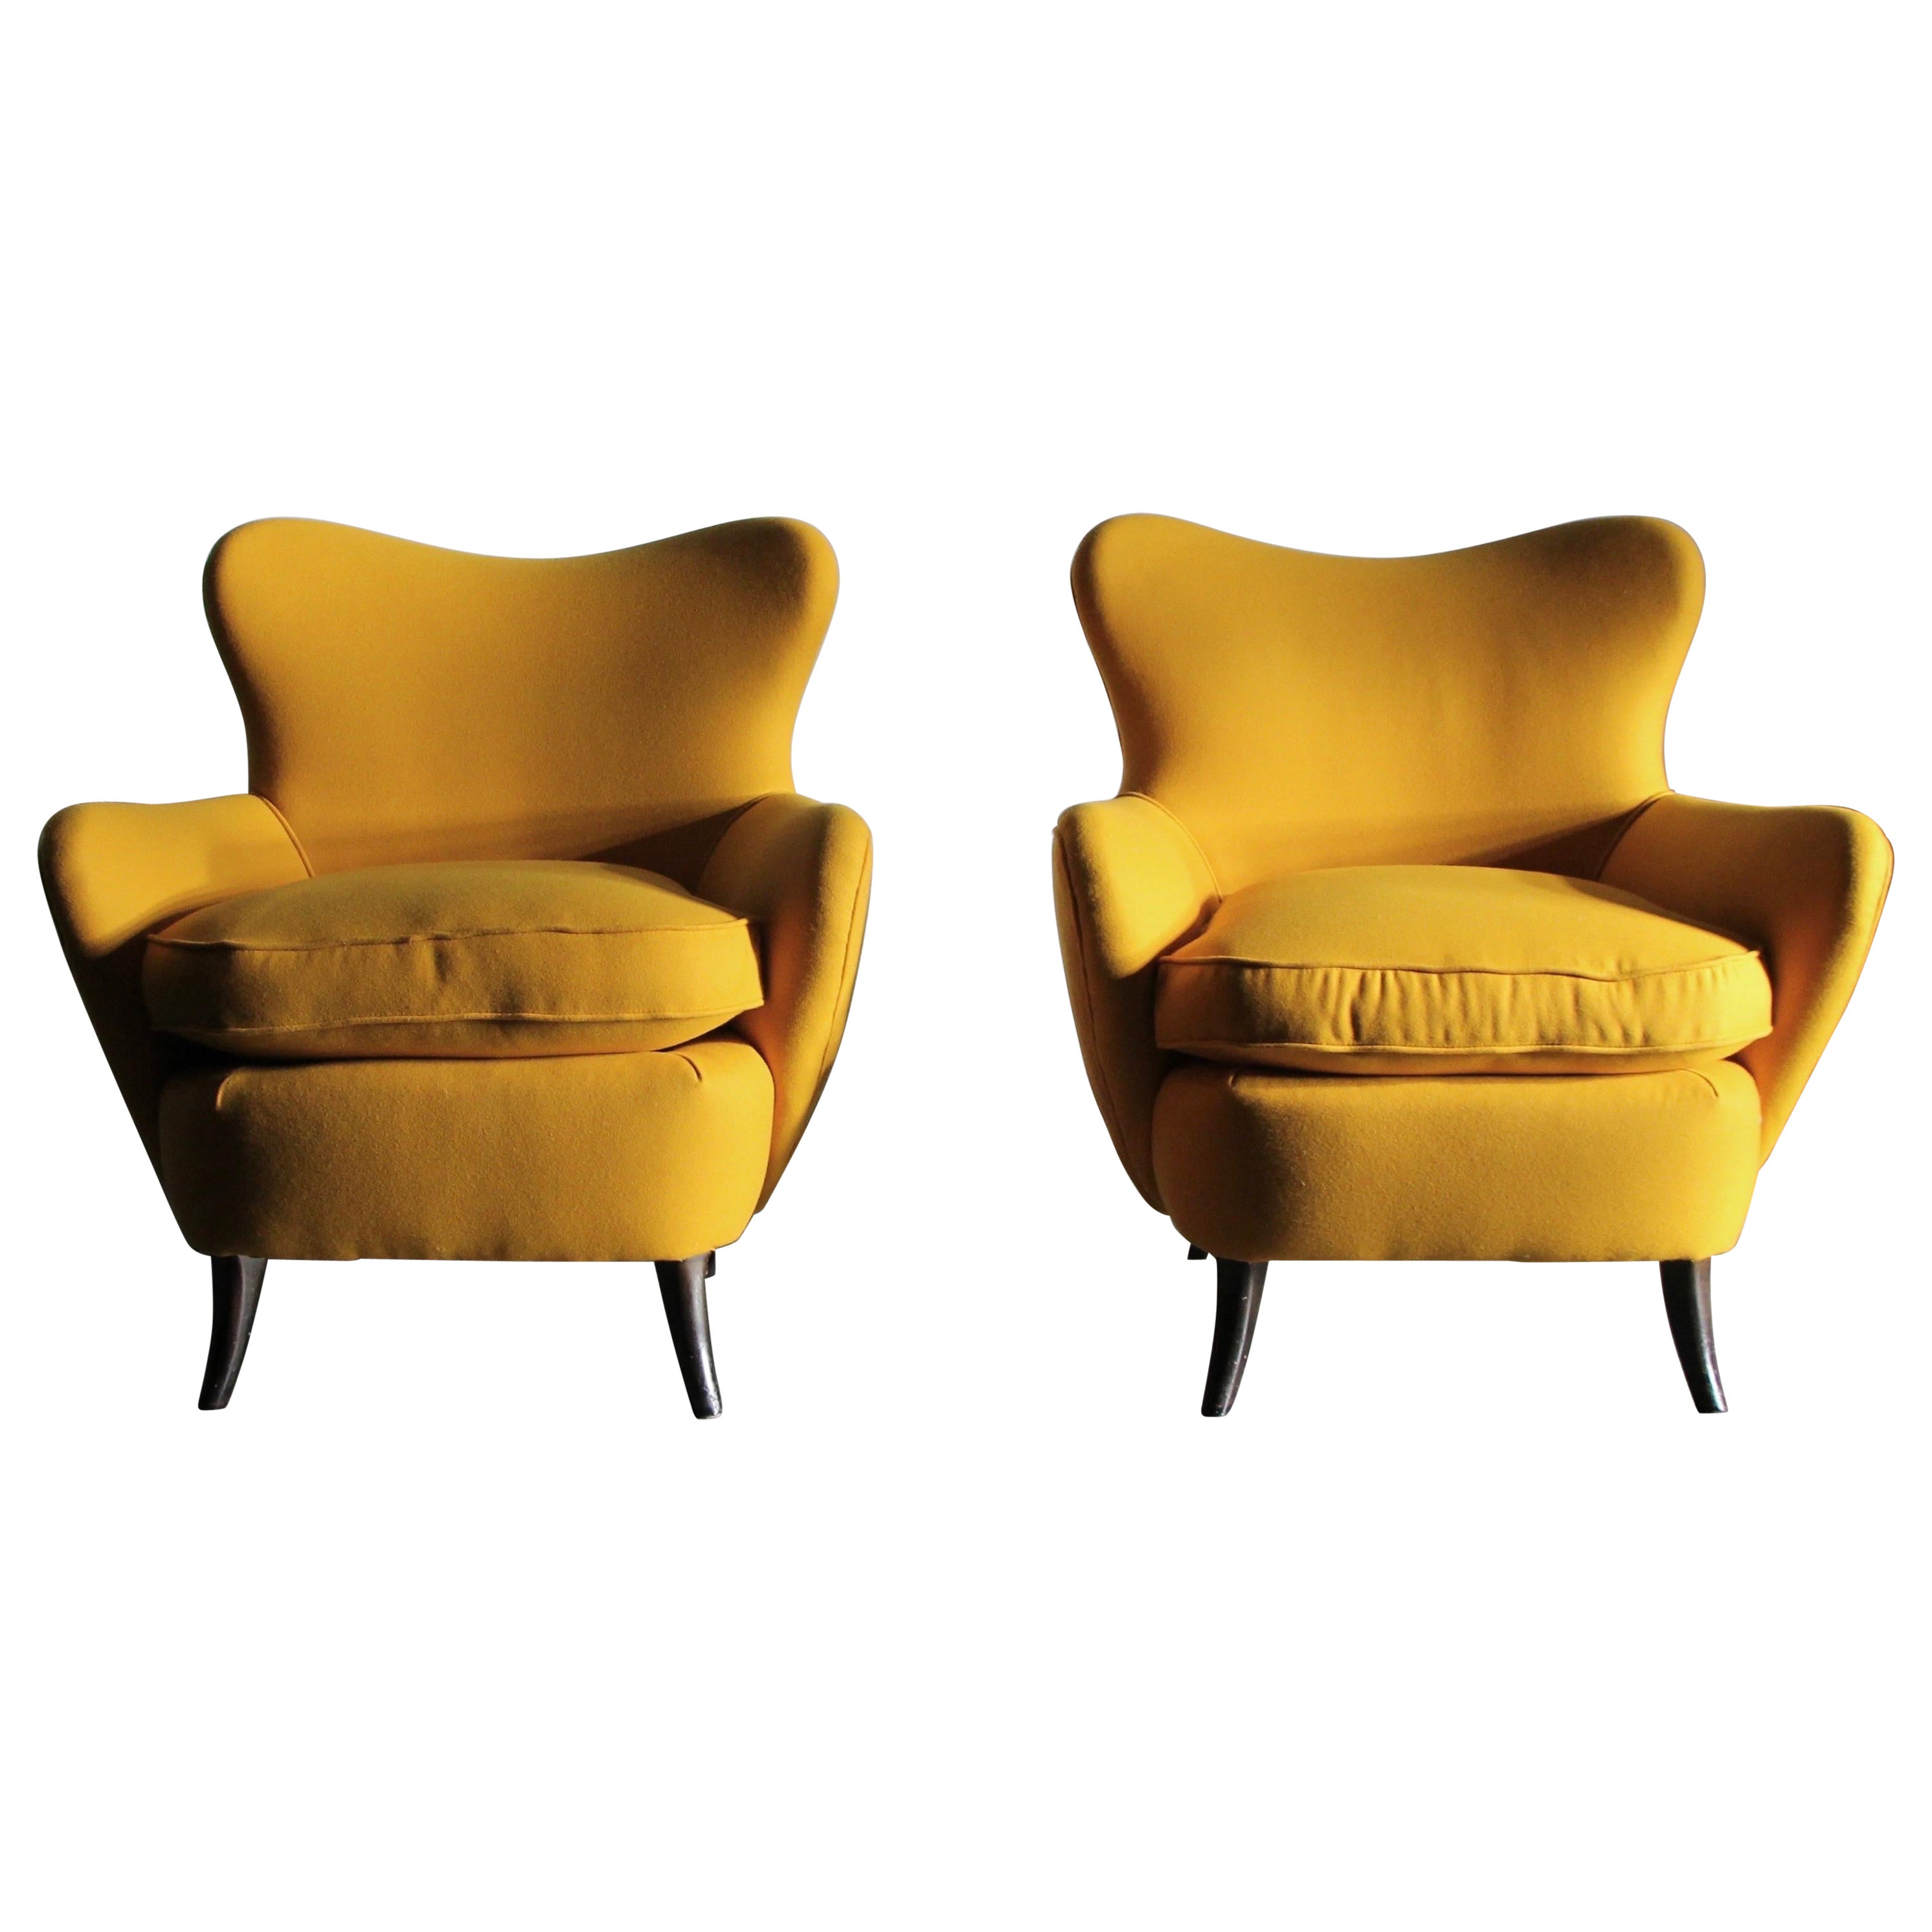 Pair of Ernst Schwadron Sculptural Wool Lounge Chairs, 1940s